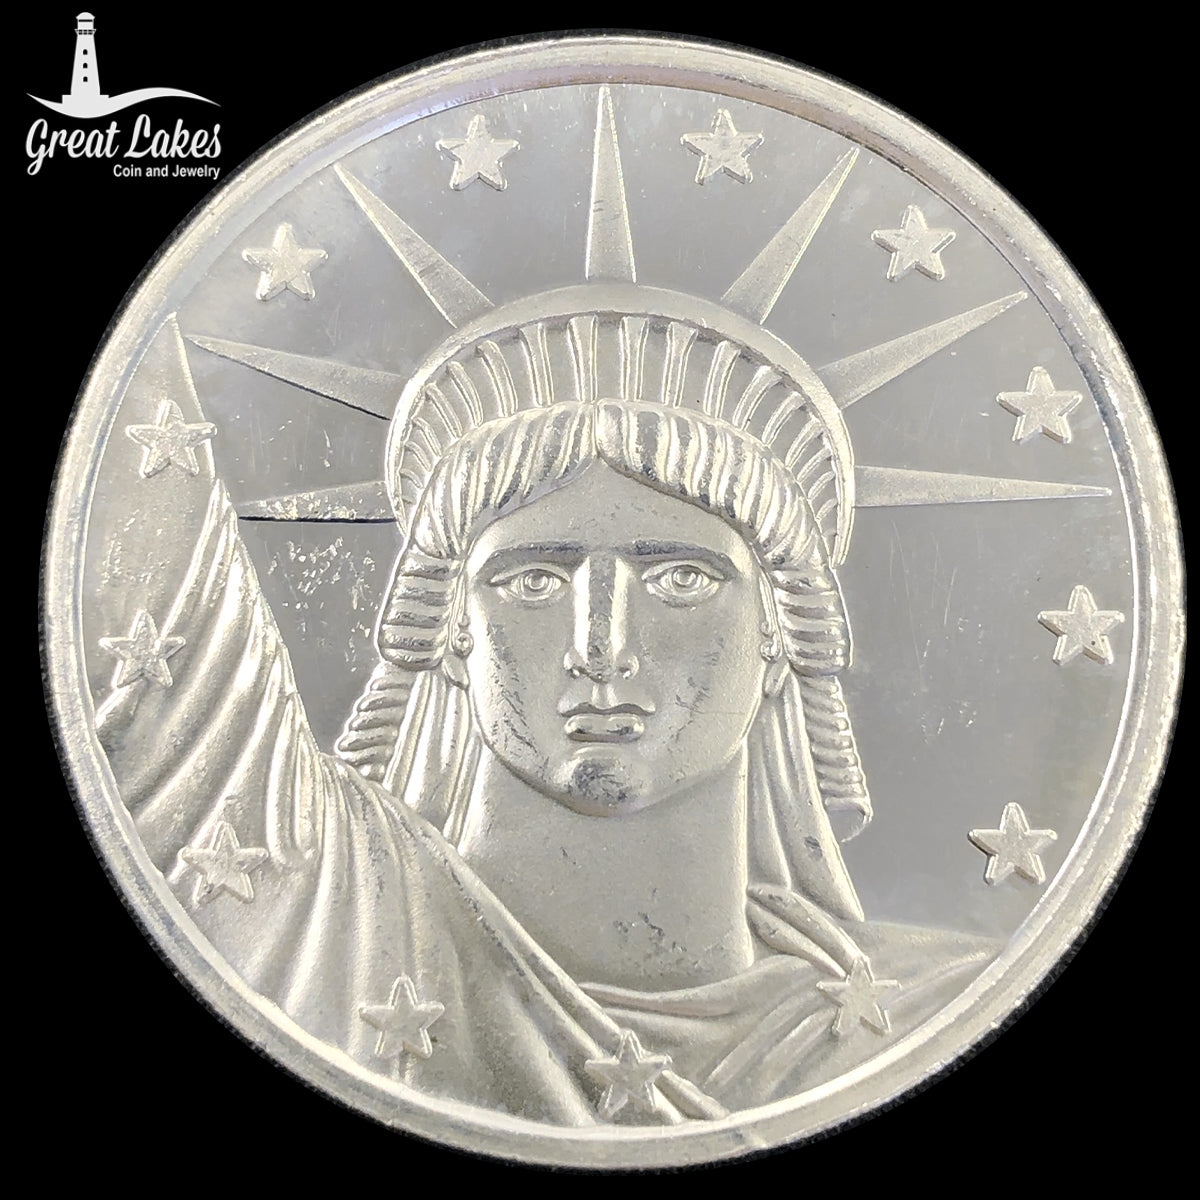 SilverTowne Mint Lady Liberty 1 oz Silver Round (Secondary Market)